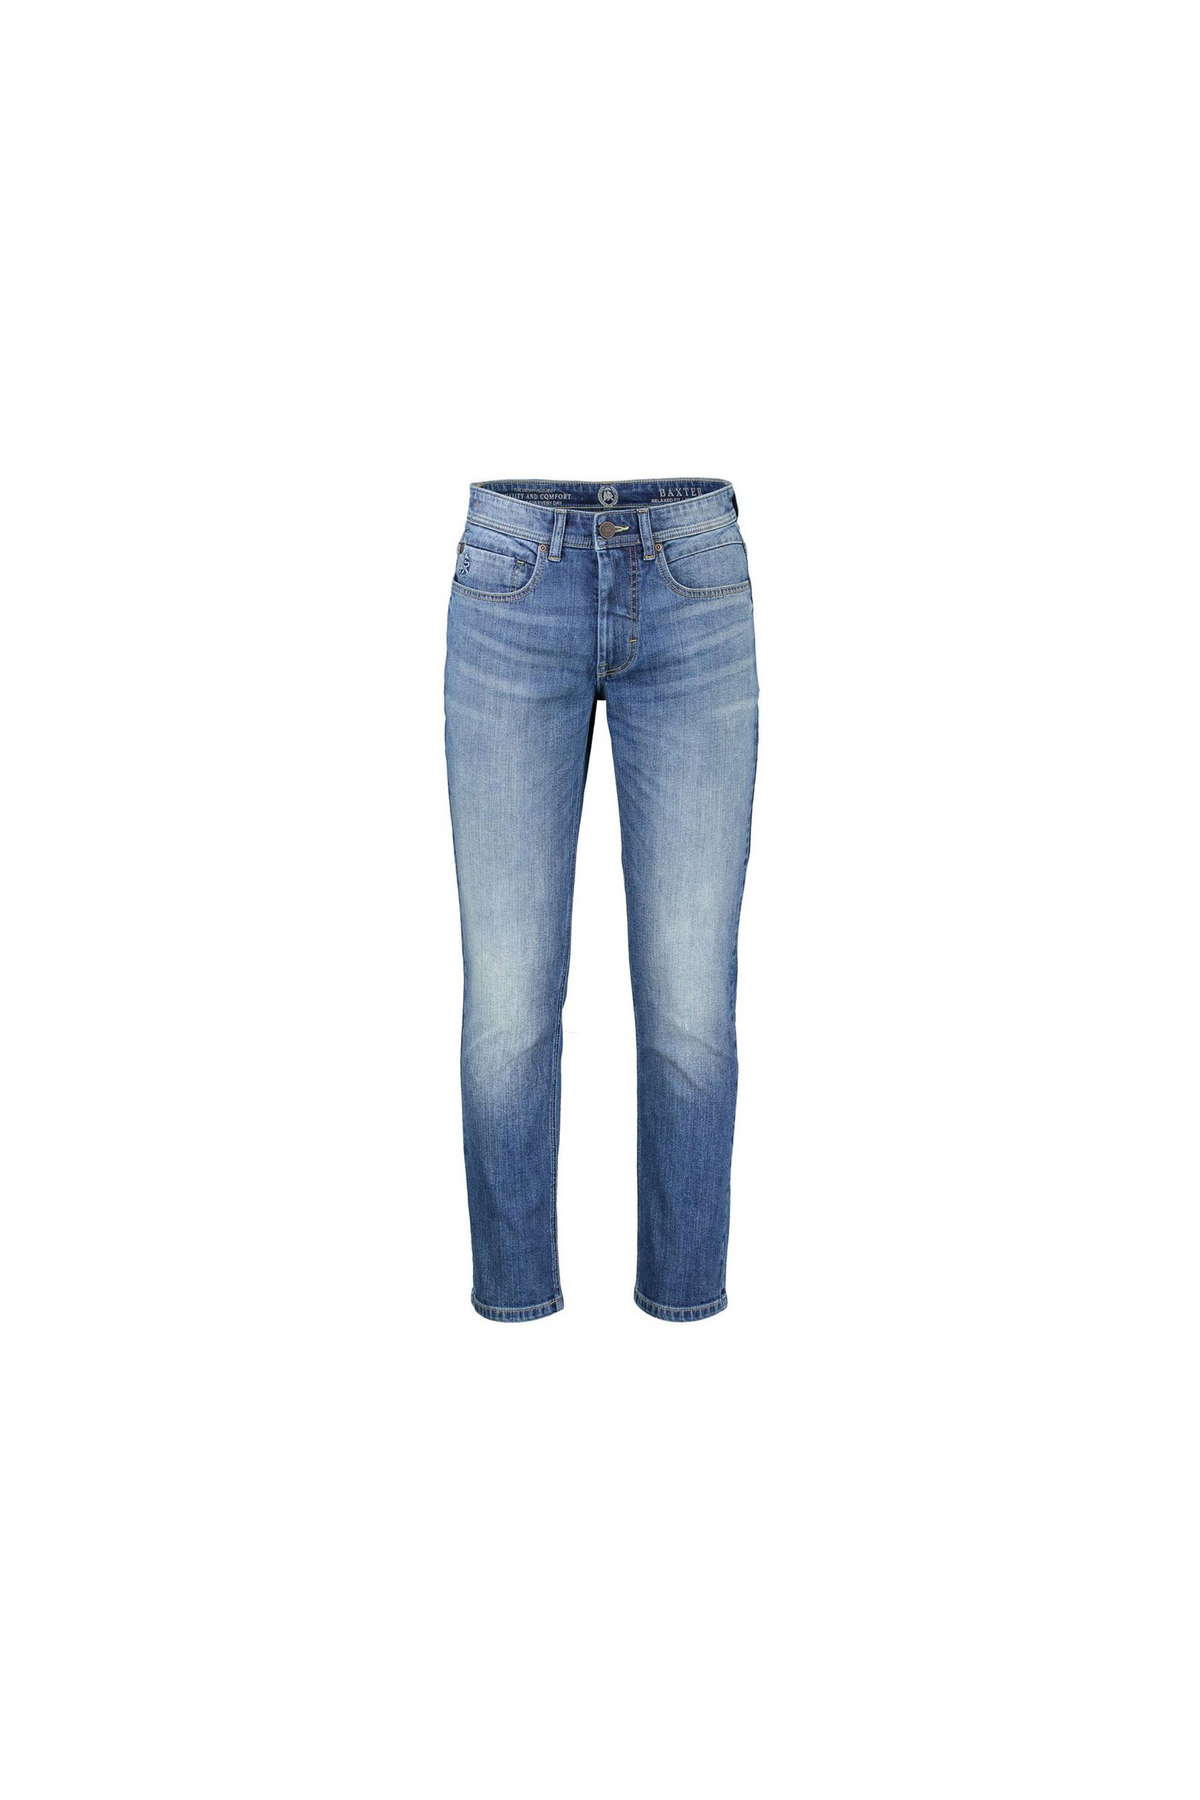 lerros Jeans - Blau - Straight - Trendyol